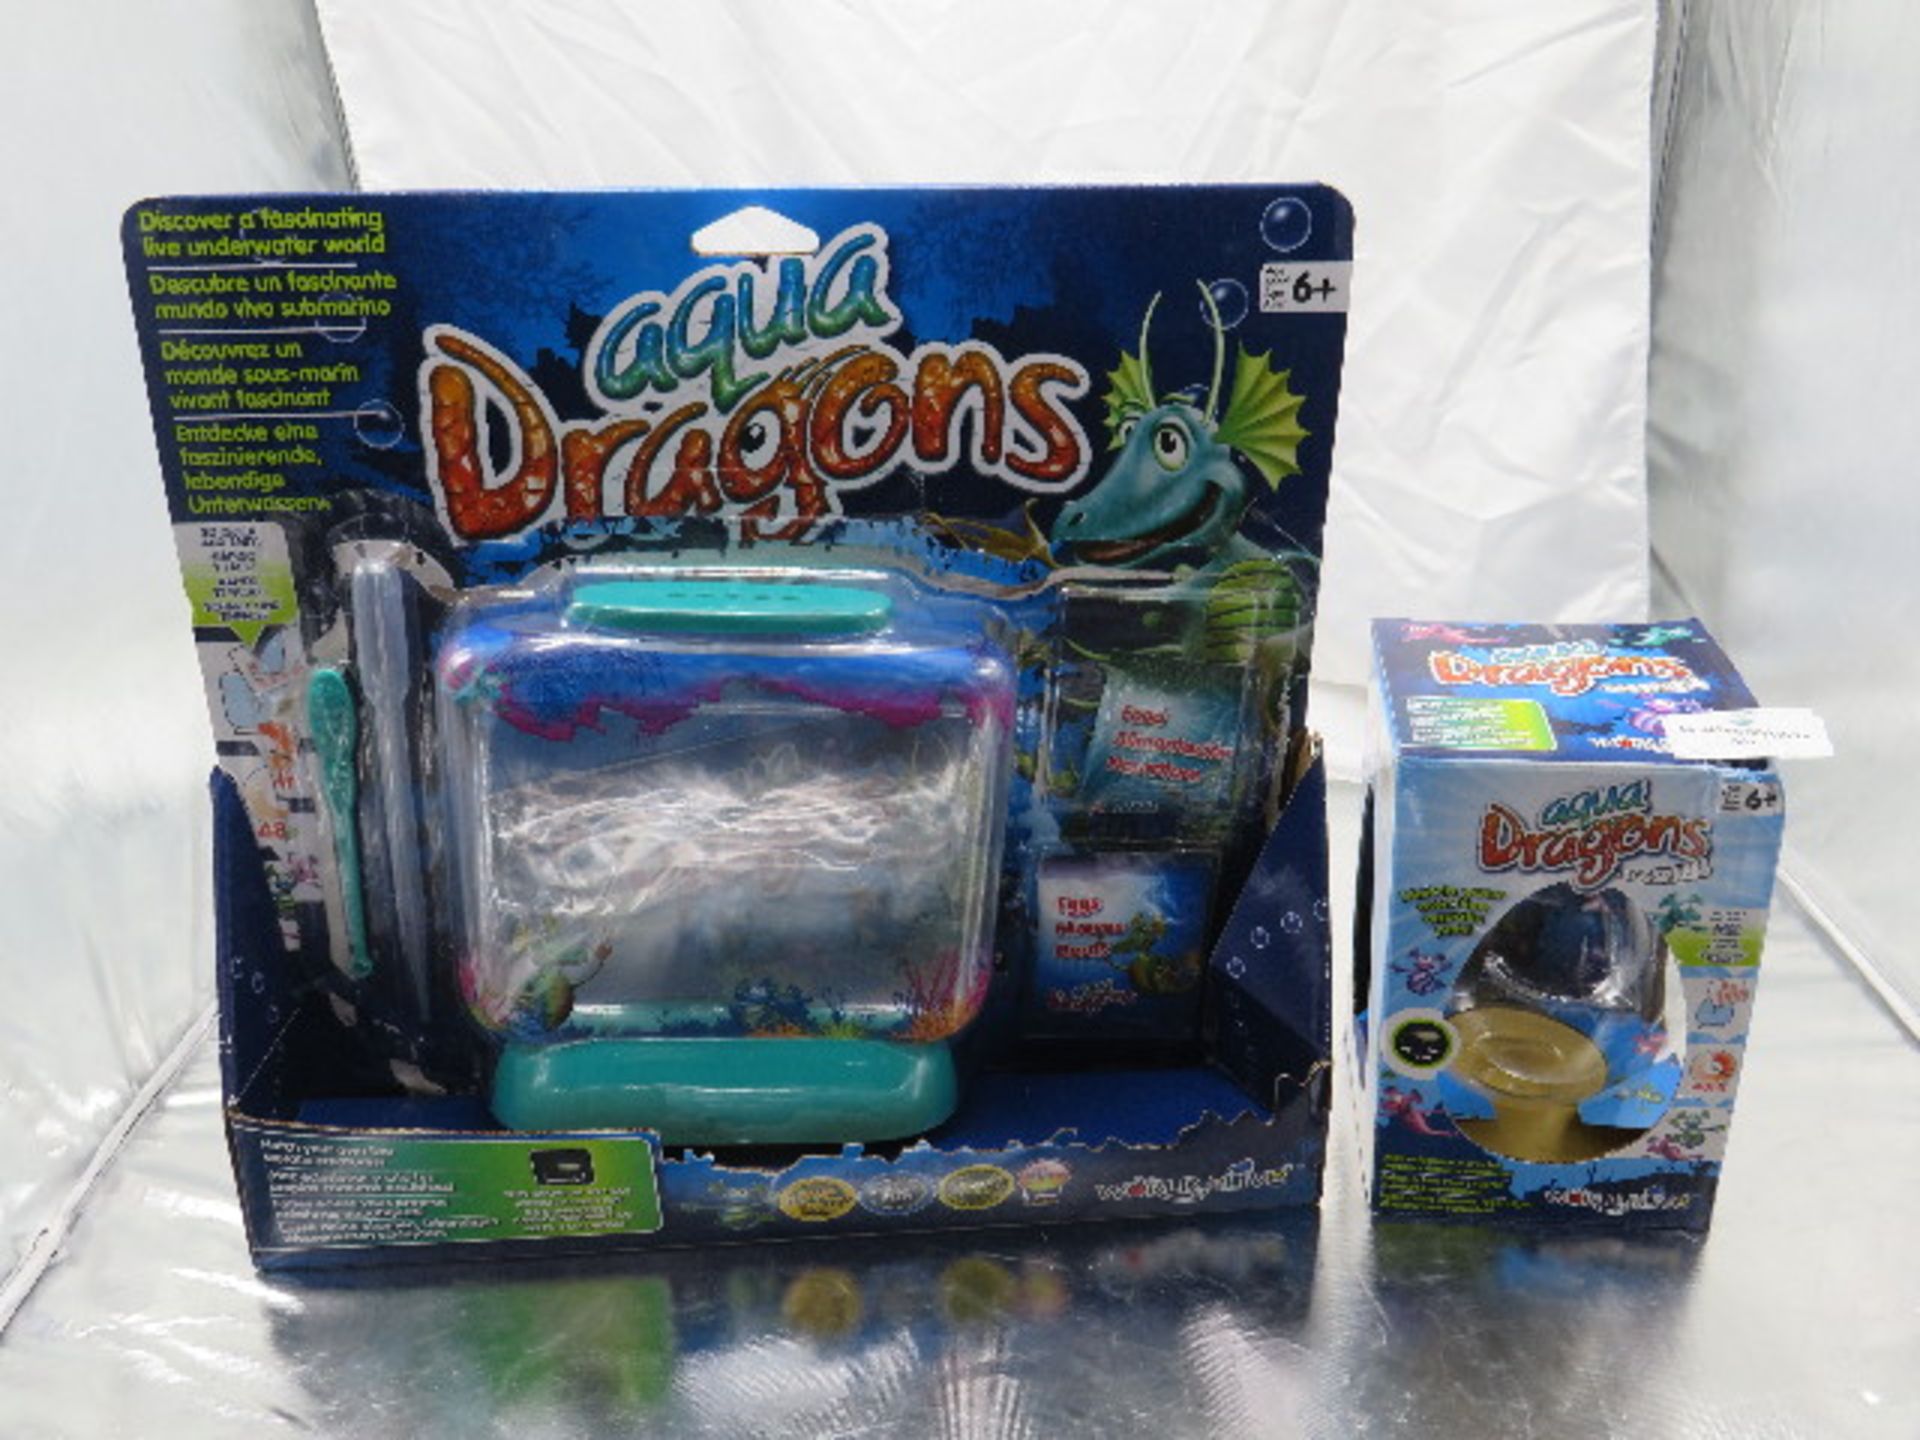 Aqua Dragons - Under water Dragons Set - Packaged.